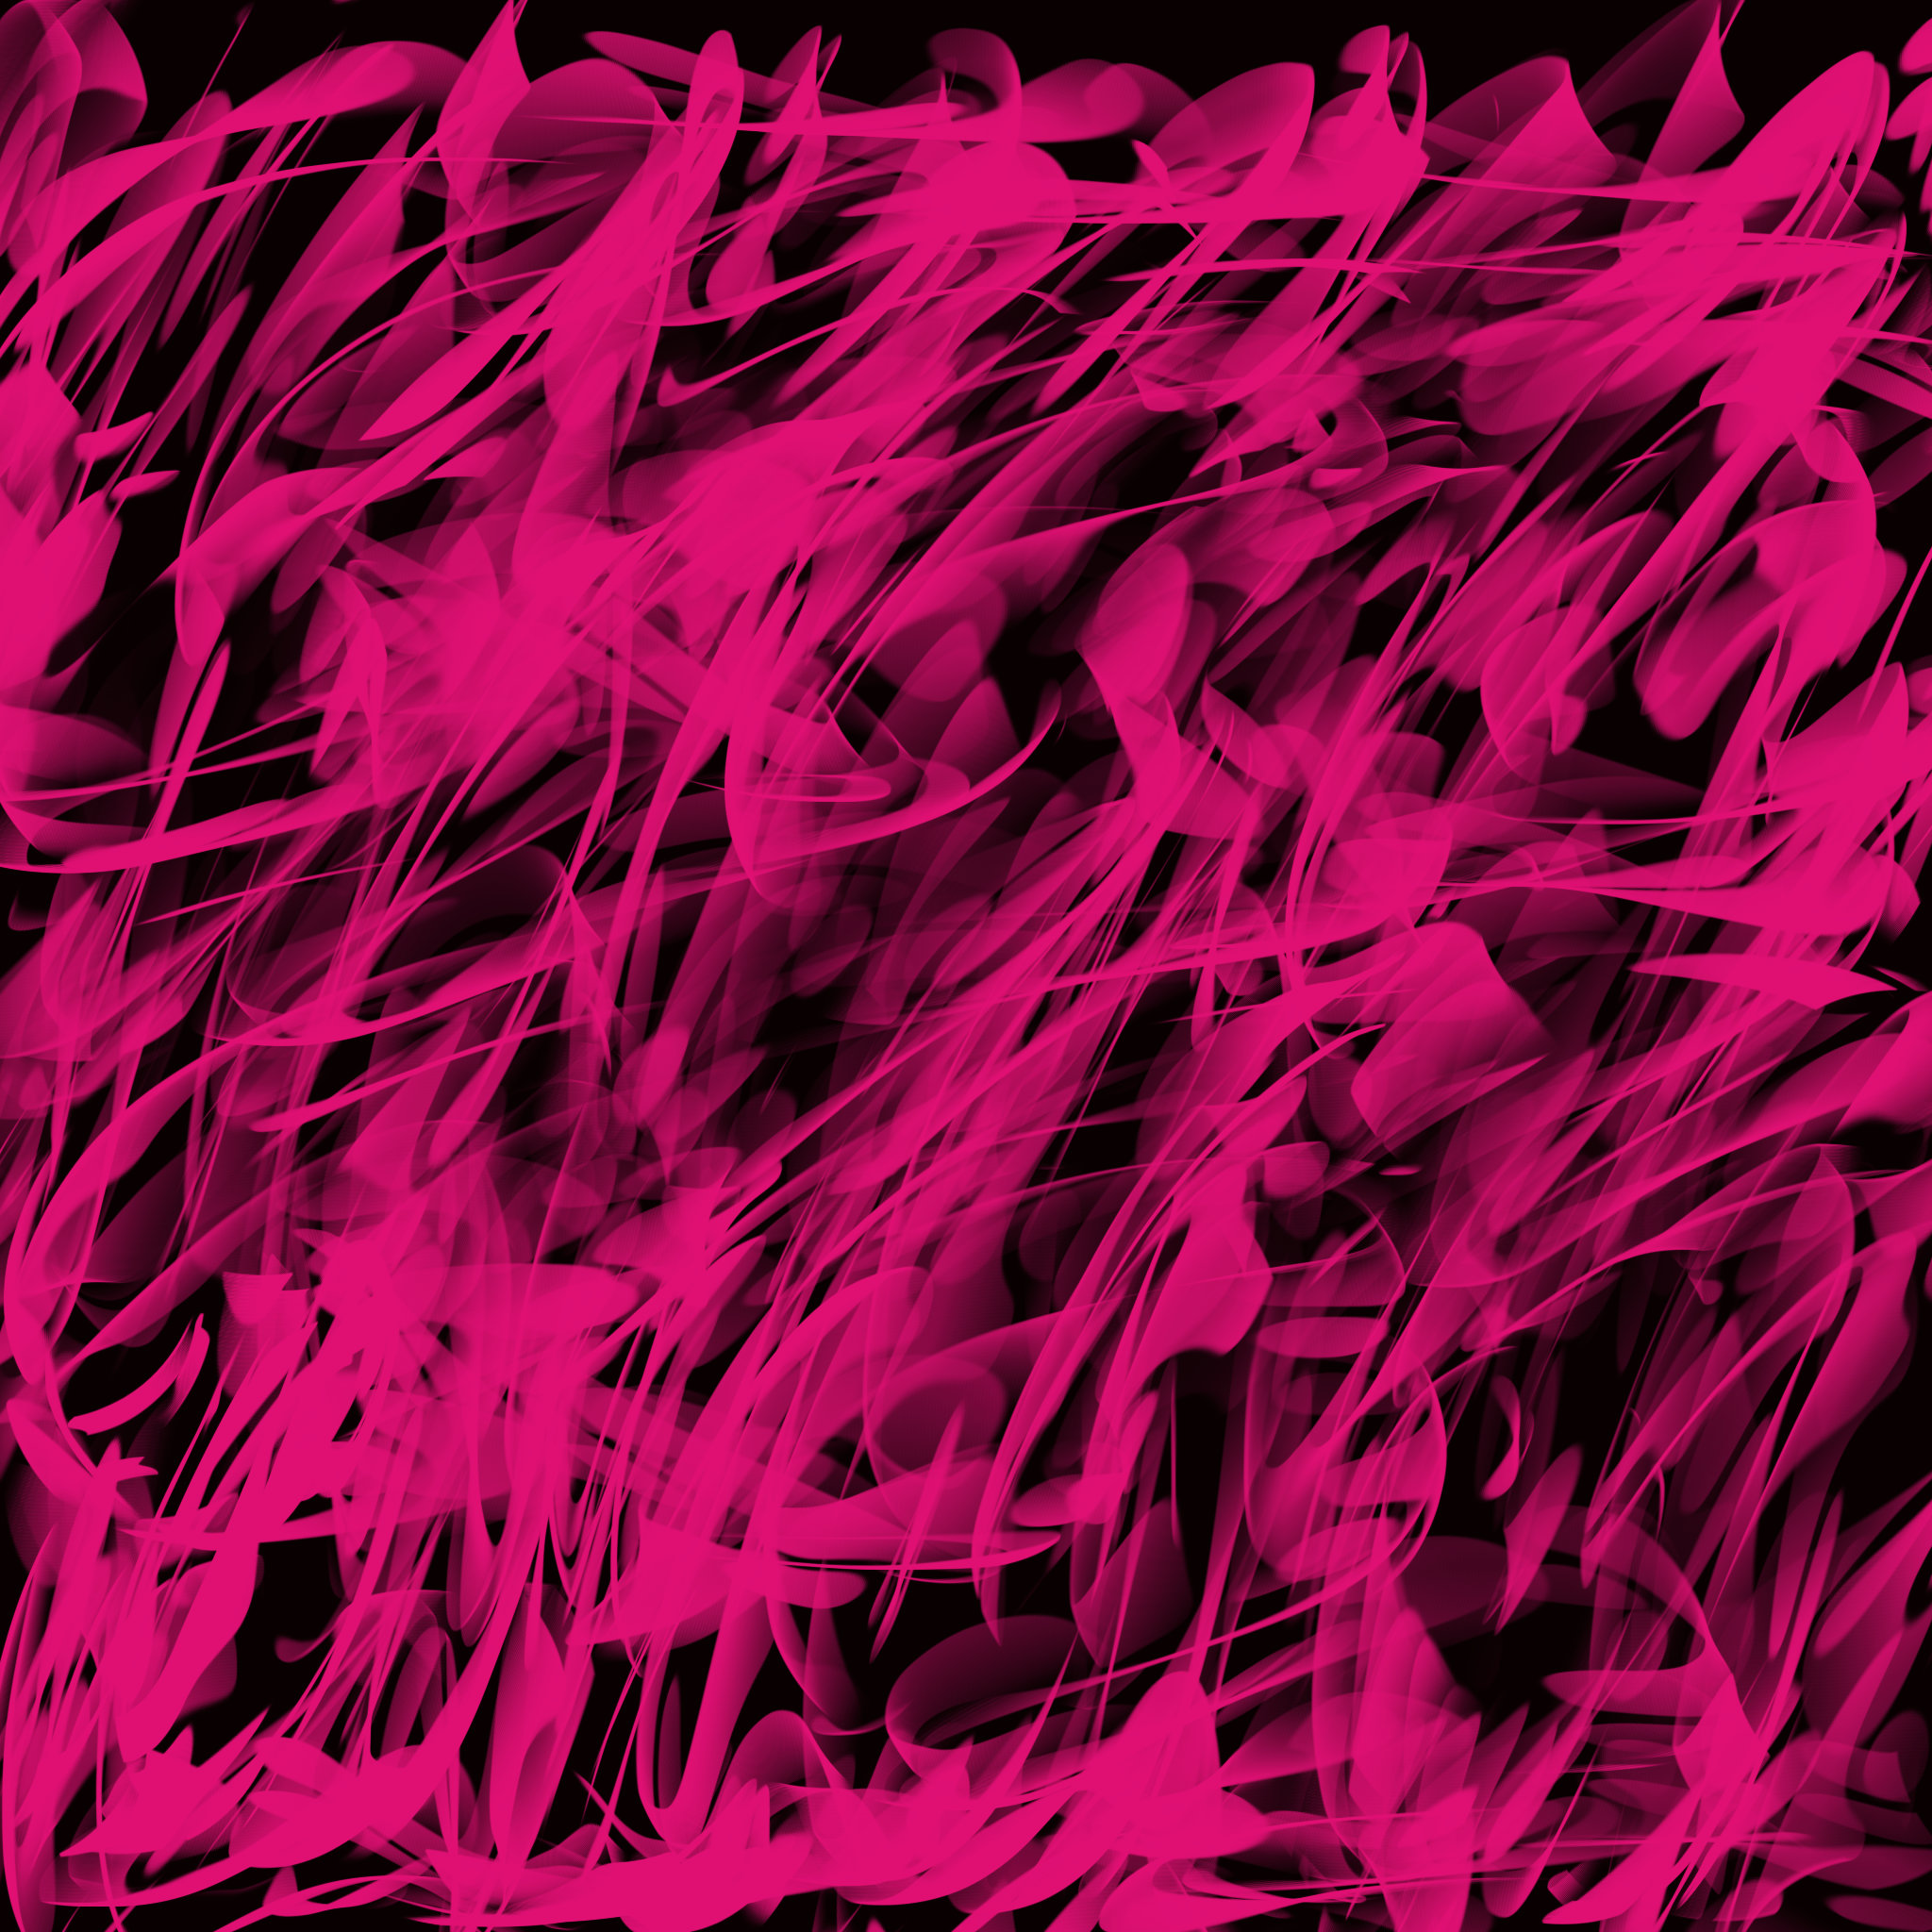 List 90+ Images hot pink and black wallpaper Full HD, 2k, 4k